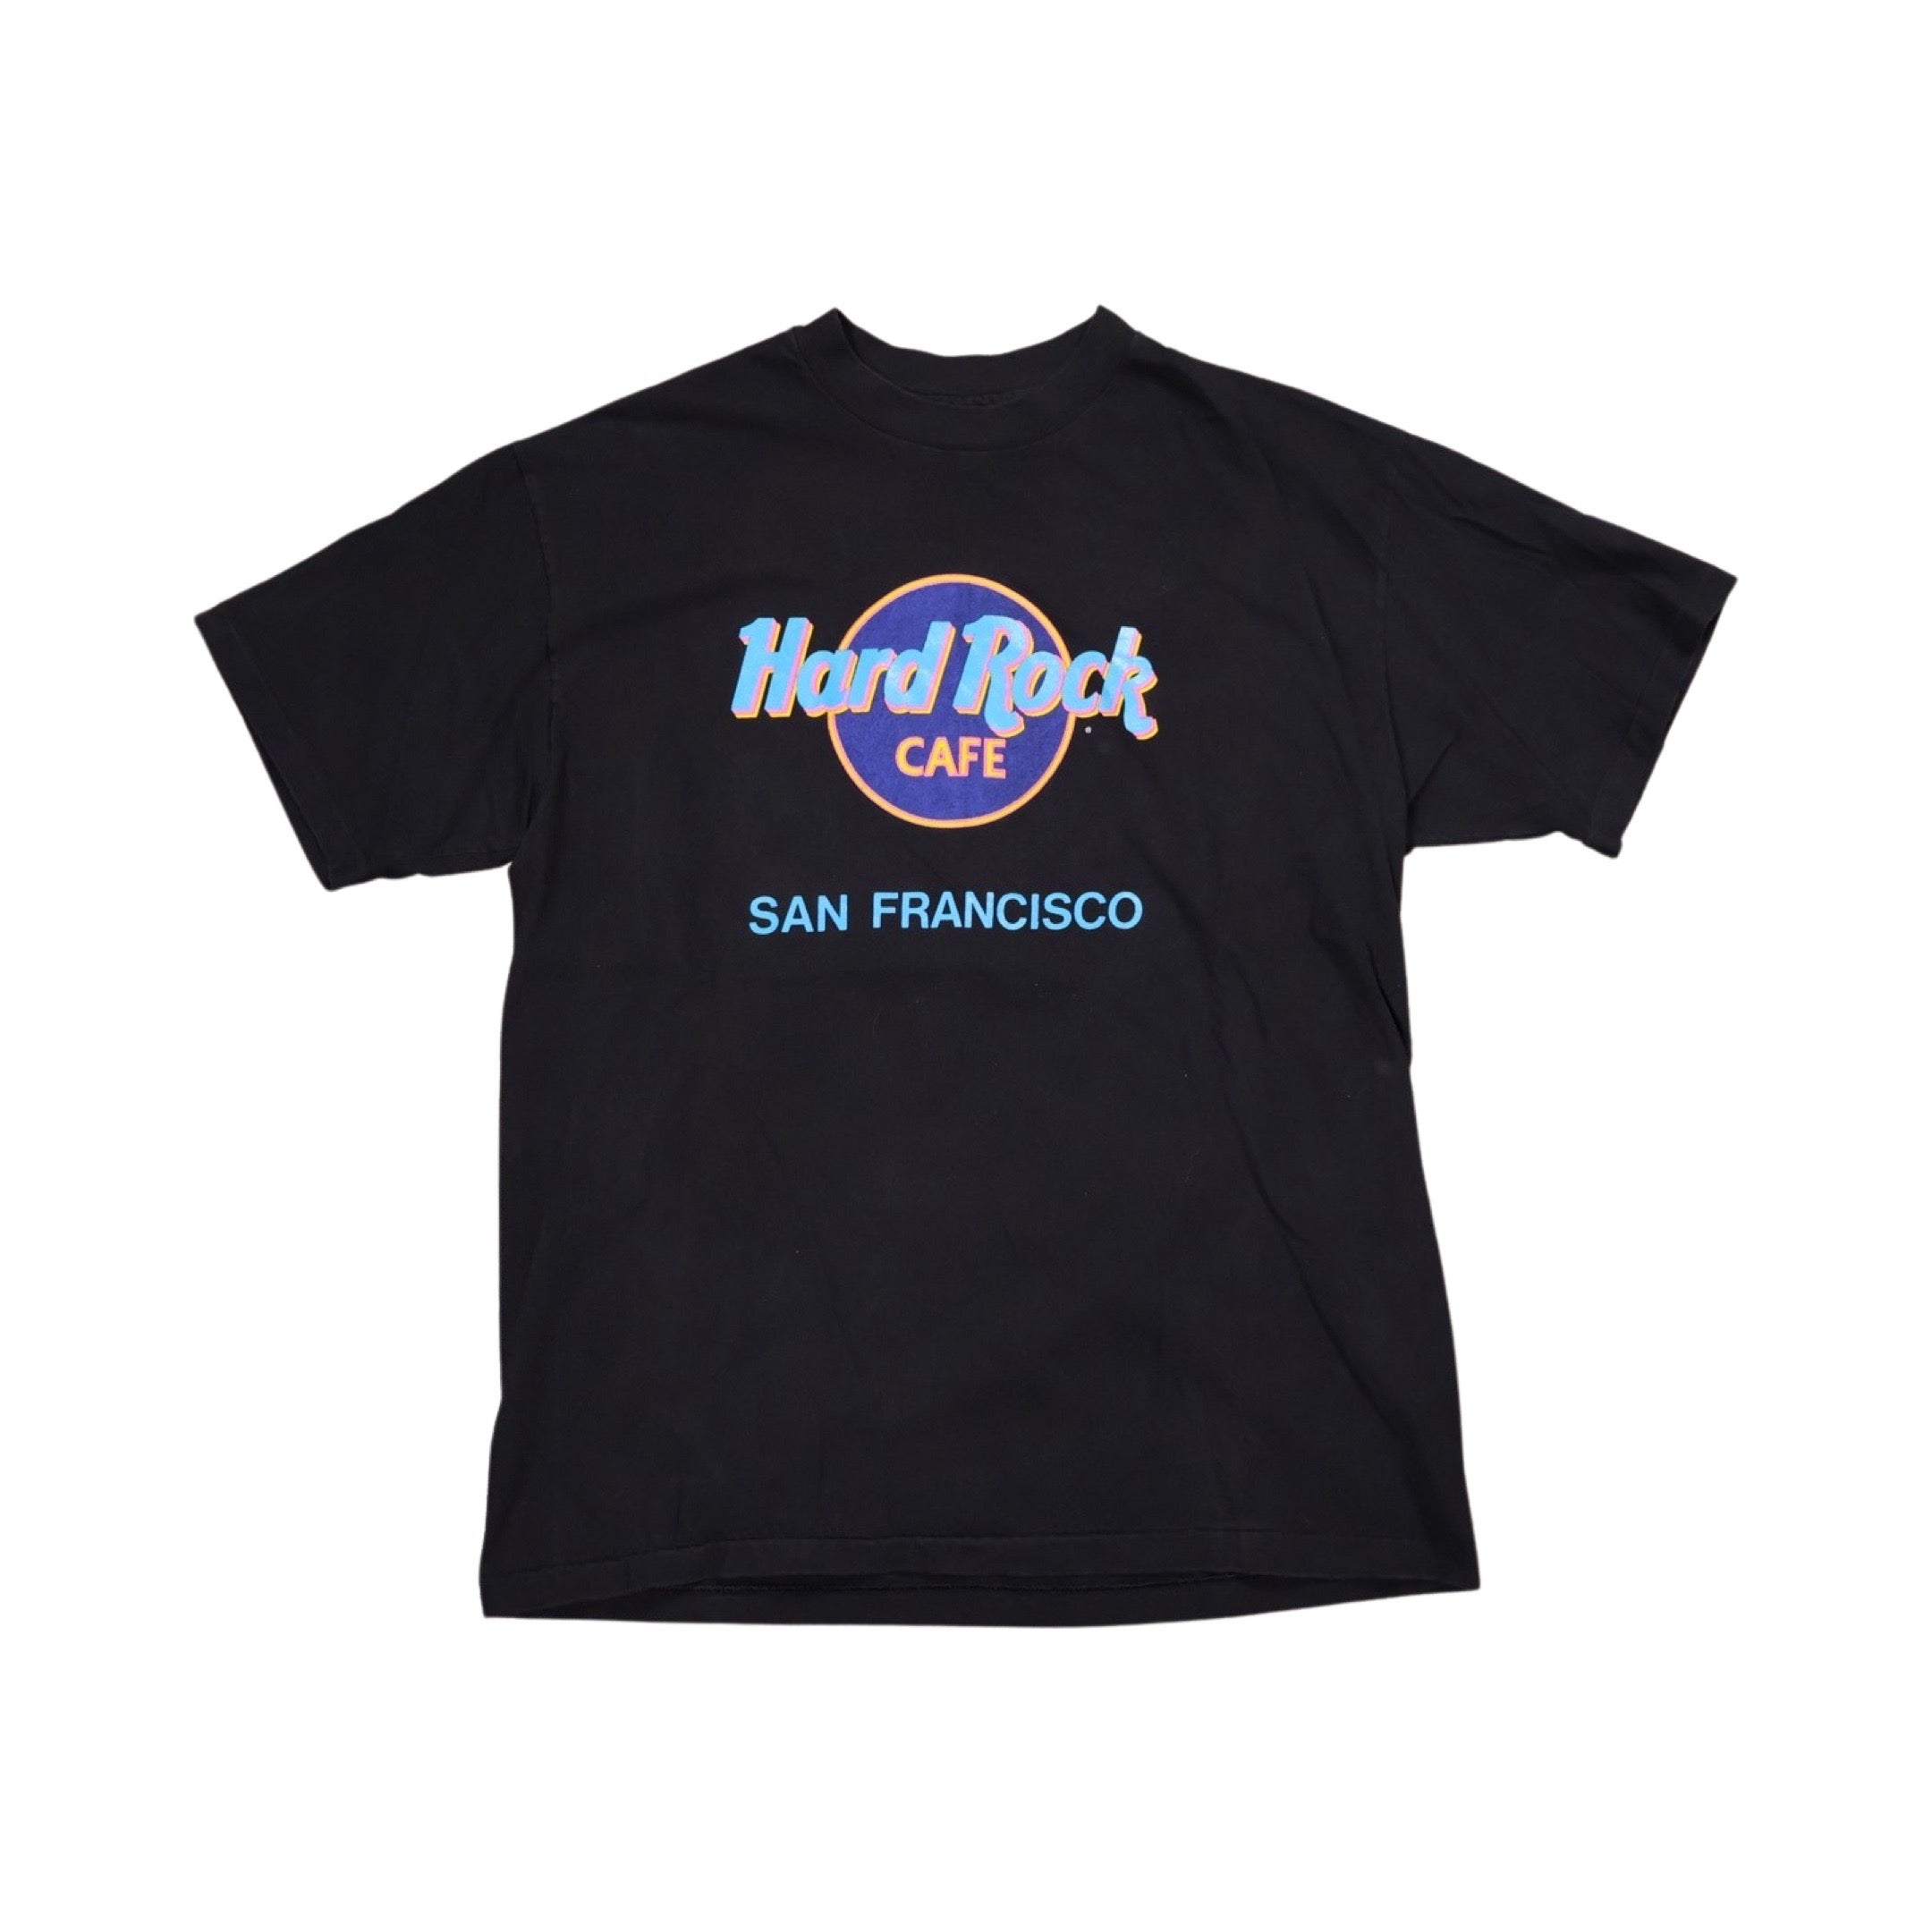 Hard Rock Cafe San Francisco 90s T-Shirt (Large)